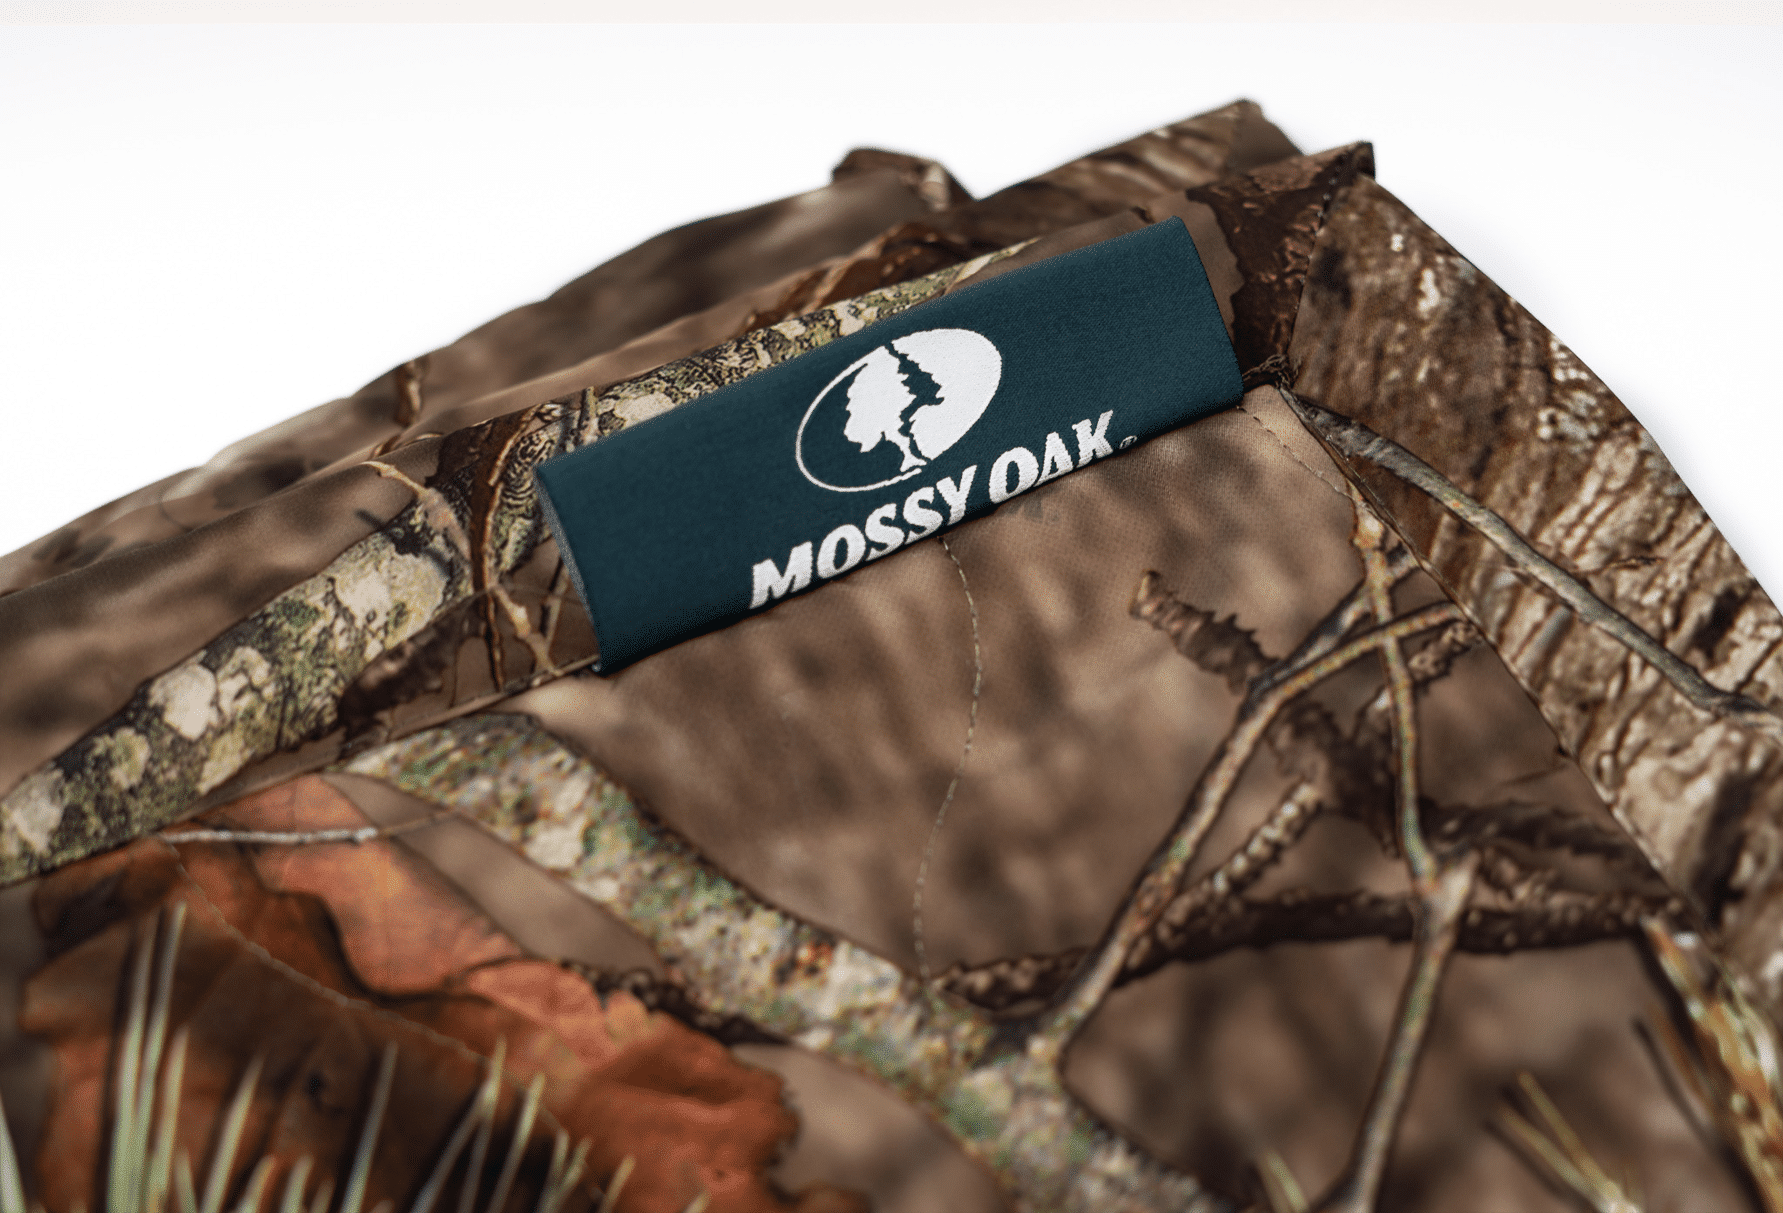 The Kodiak battery Powered Heating Blanket in Mossy Oak Break Up Country camouflage